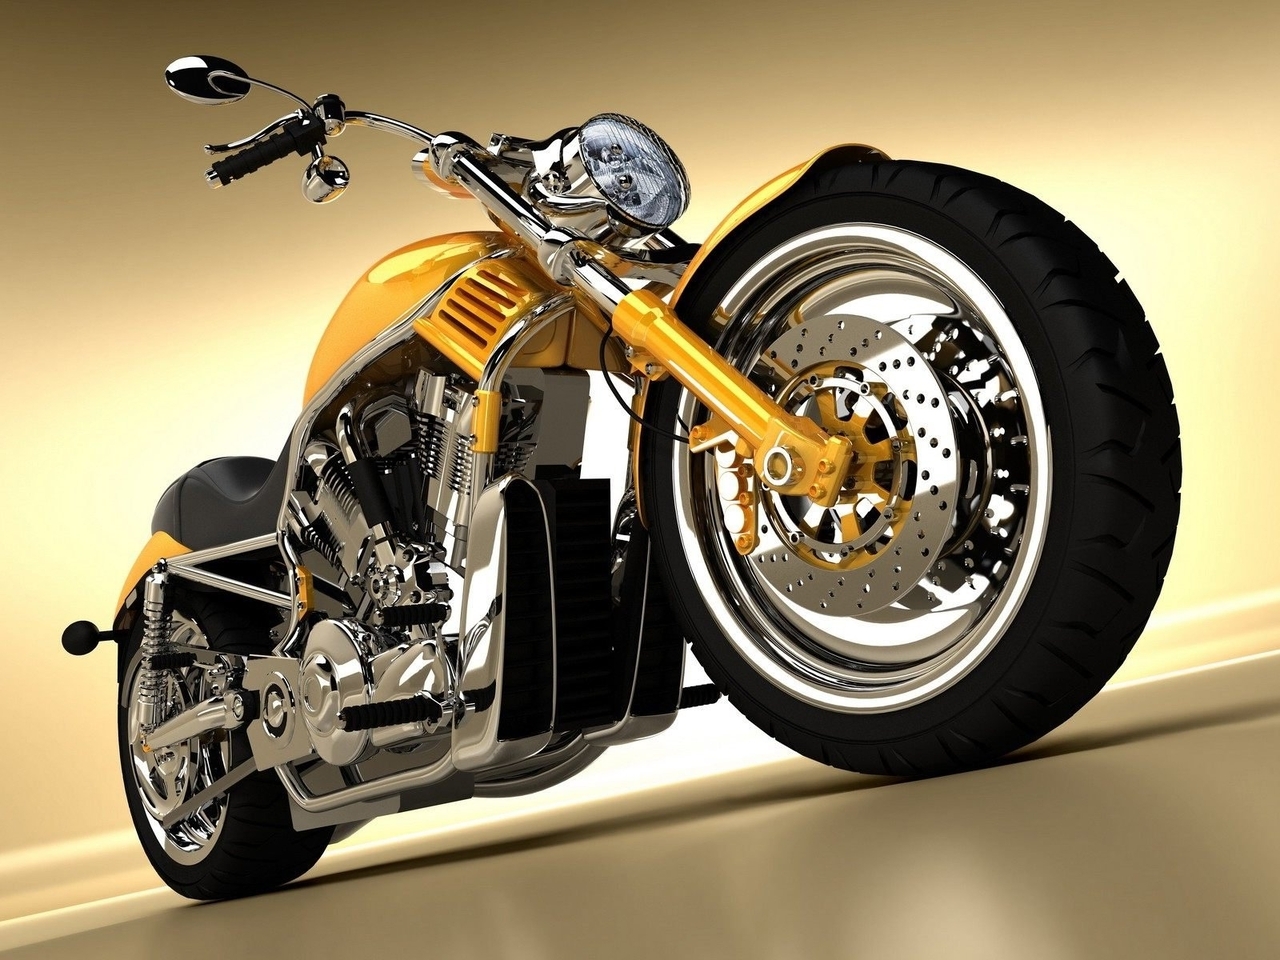 Картинка: Мотоцикл, Harley Davidson, жёлтый, литьё, колёса, руль, фара, зеркало